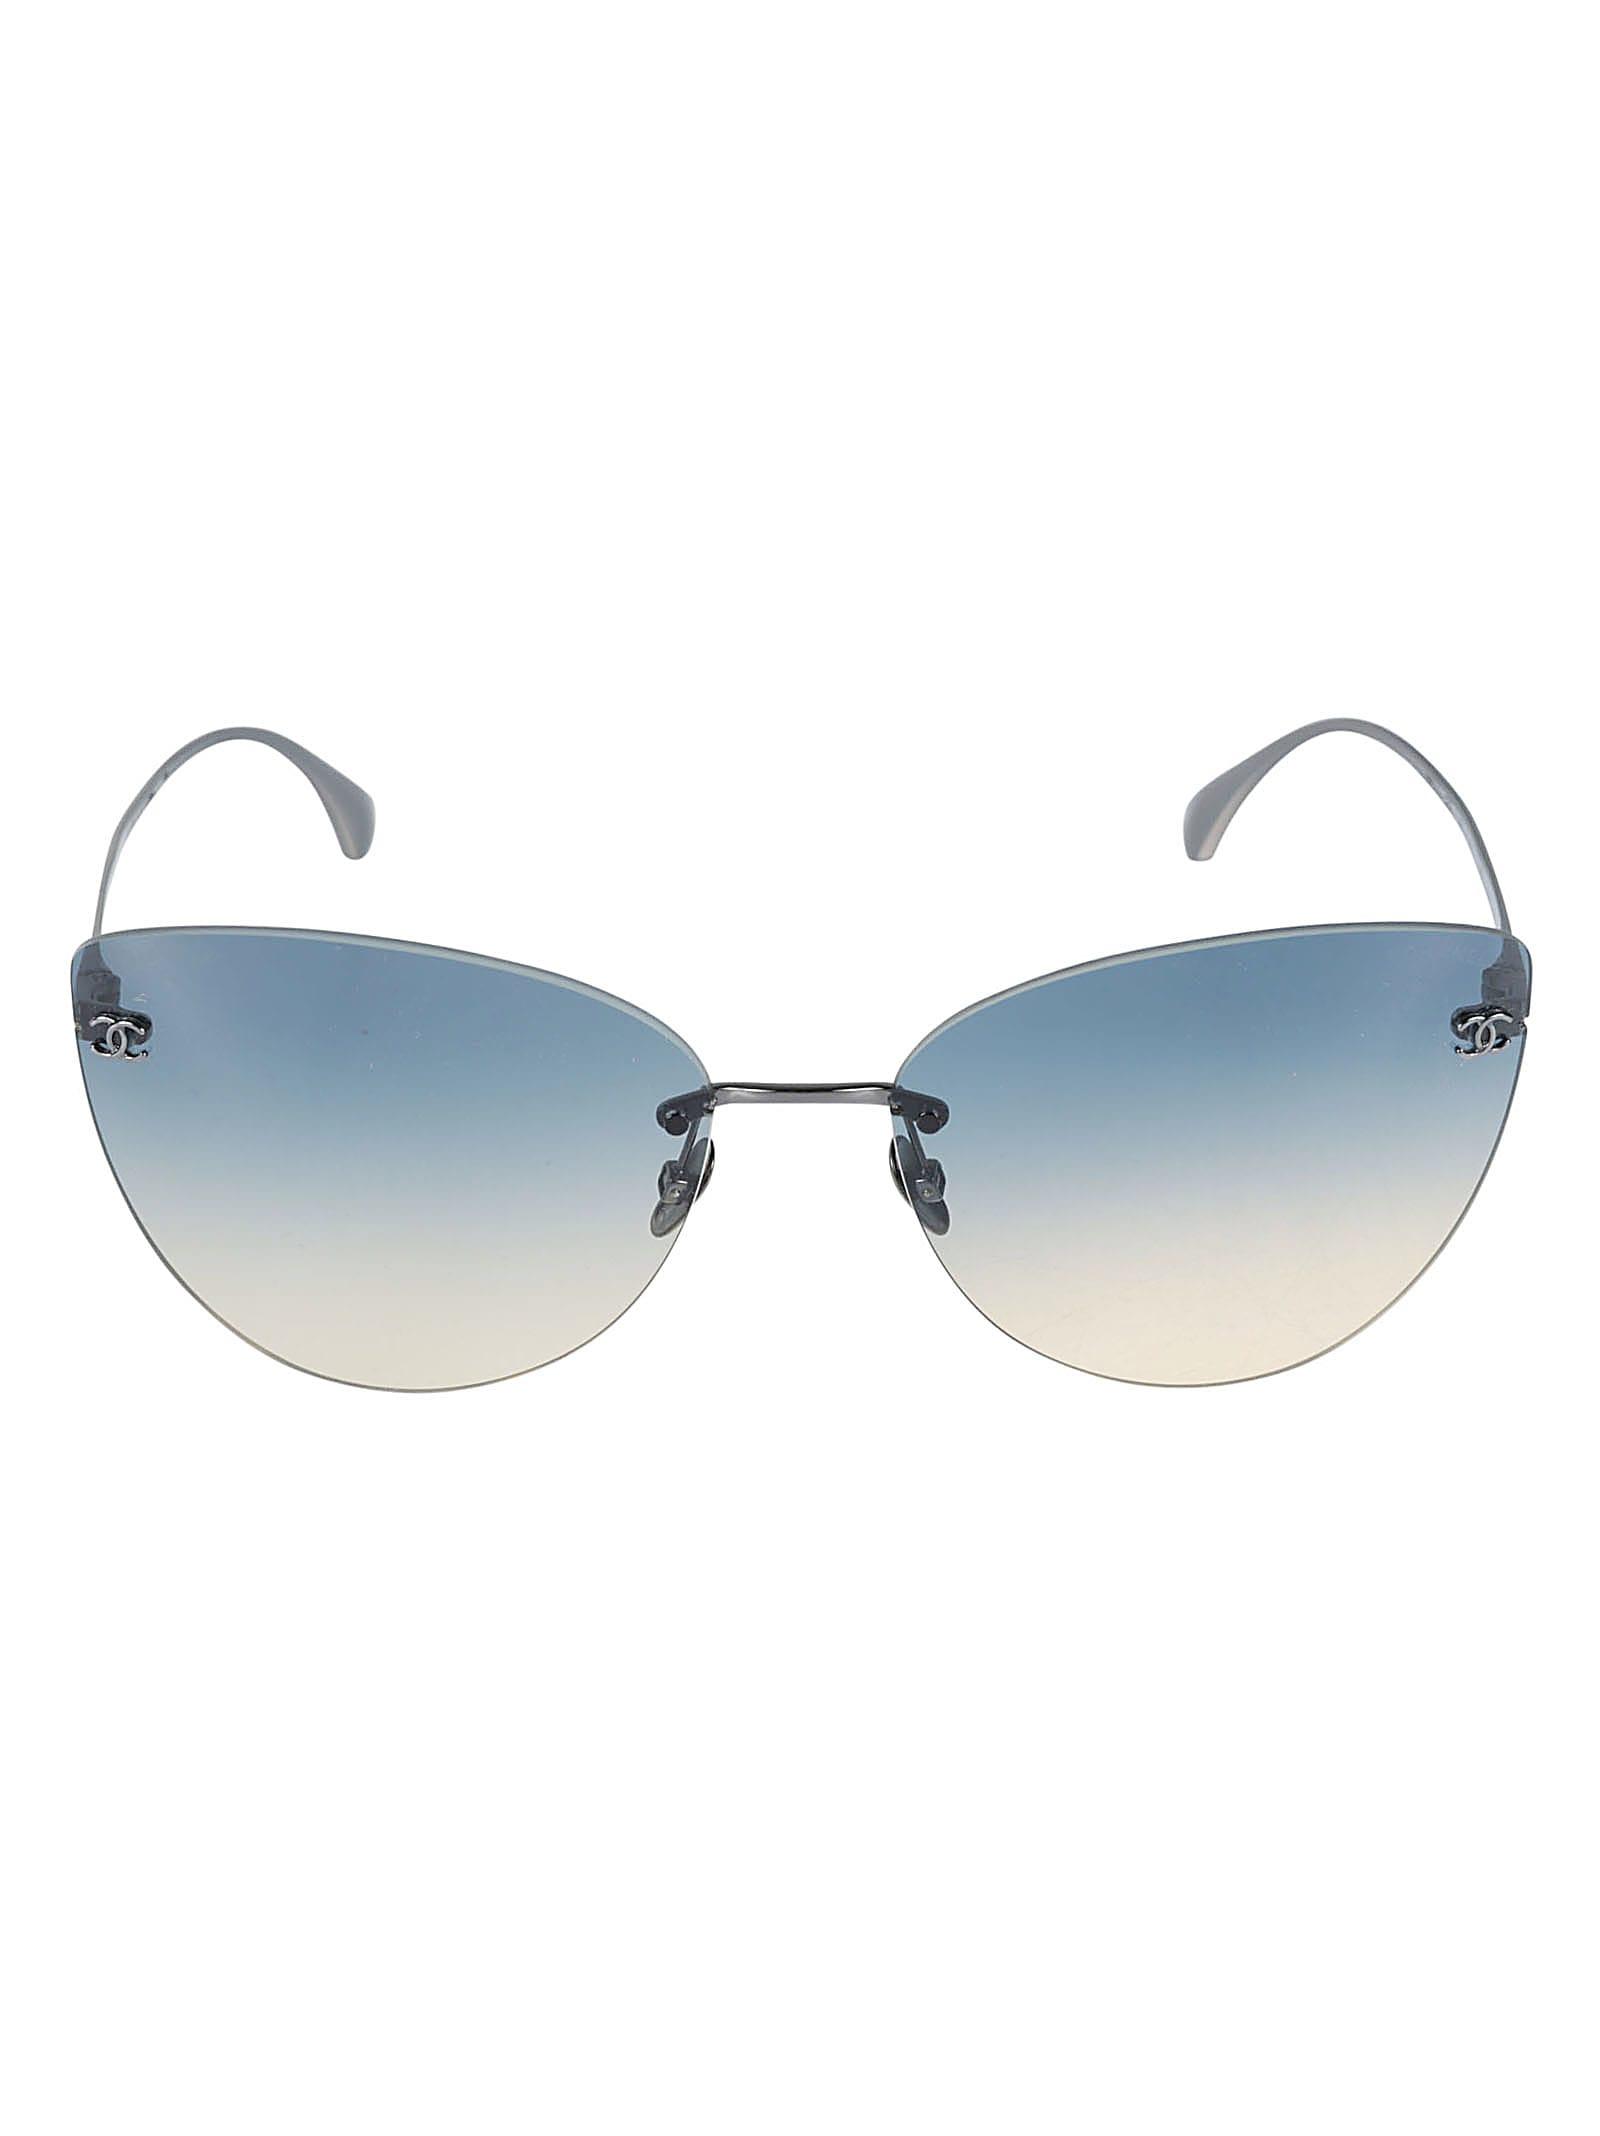 chanel sunglasses womens sale